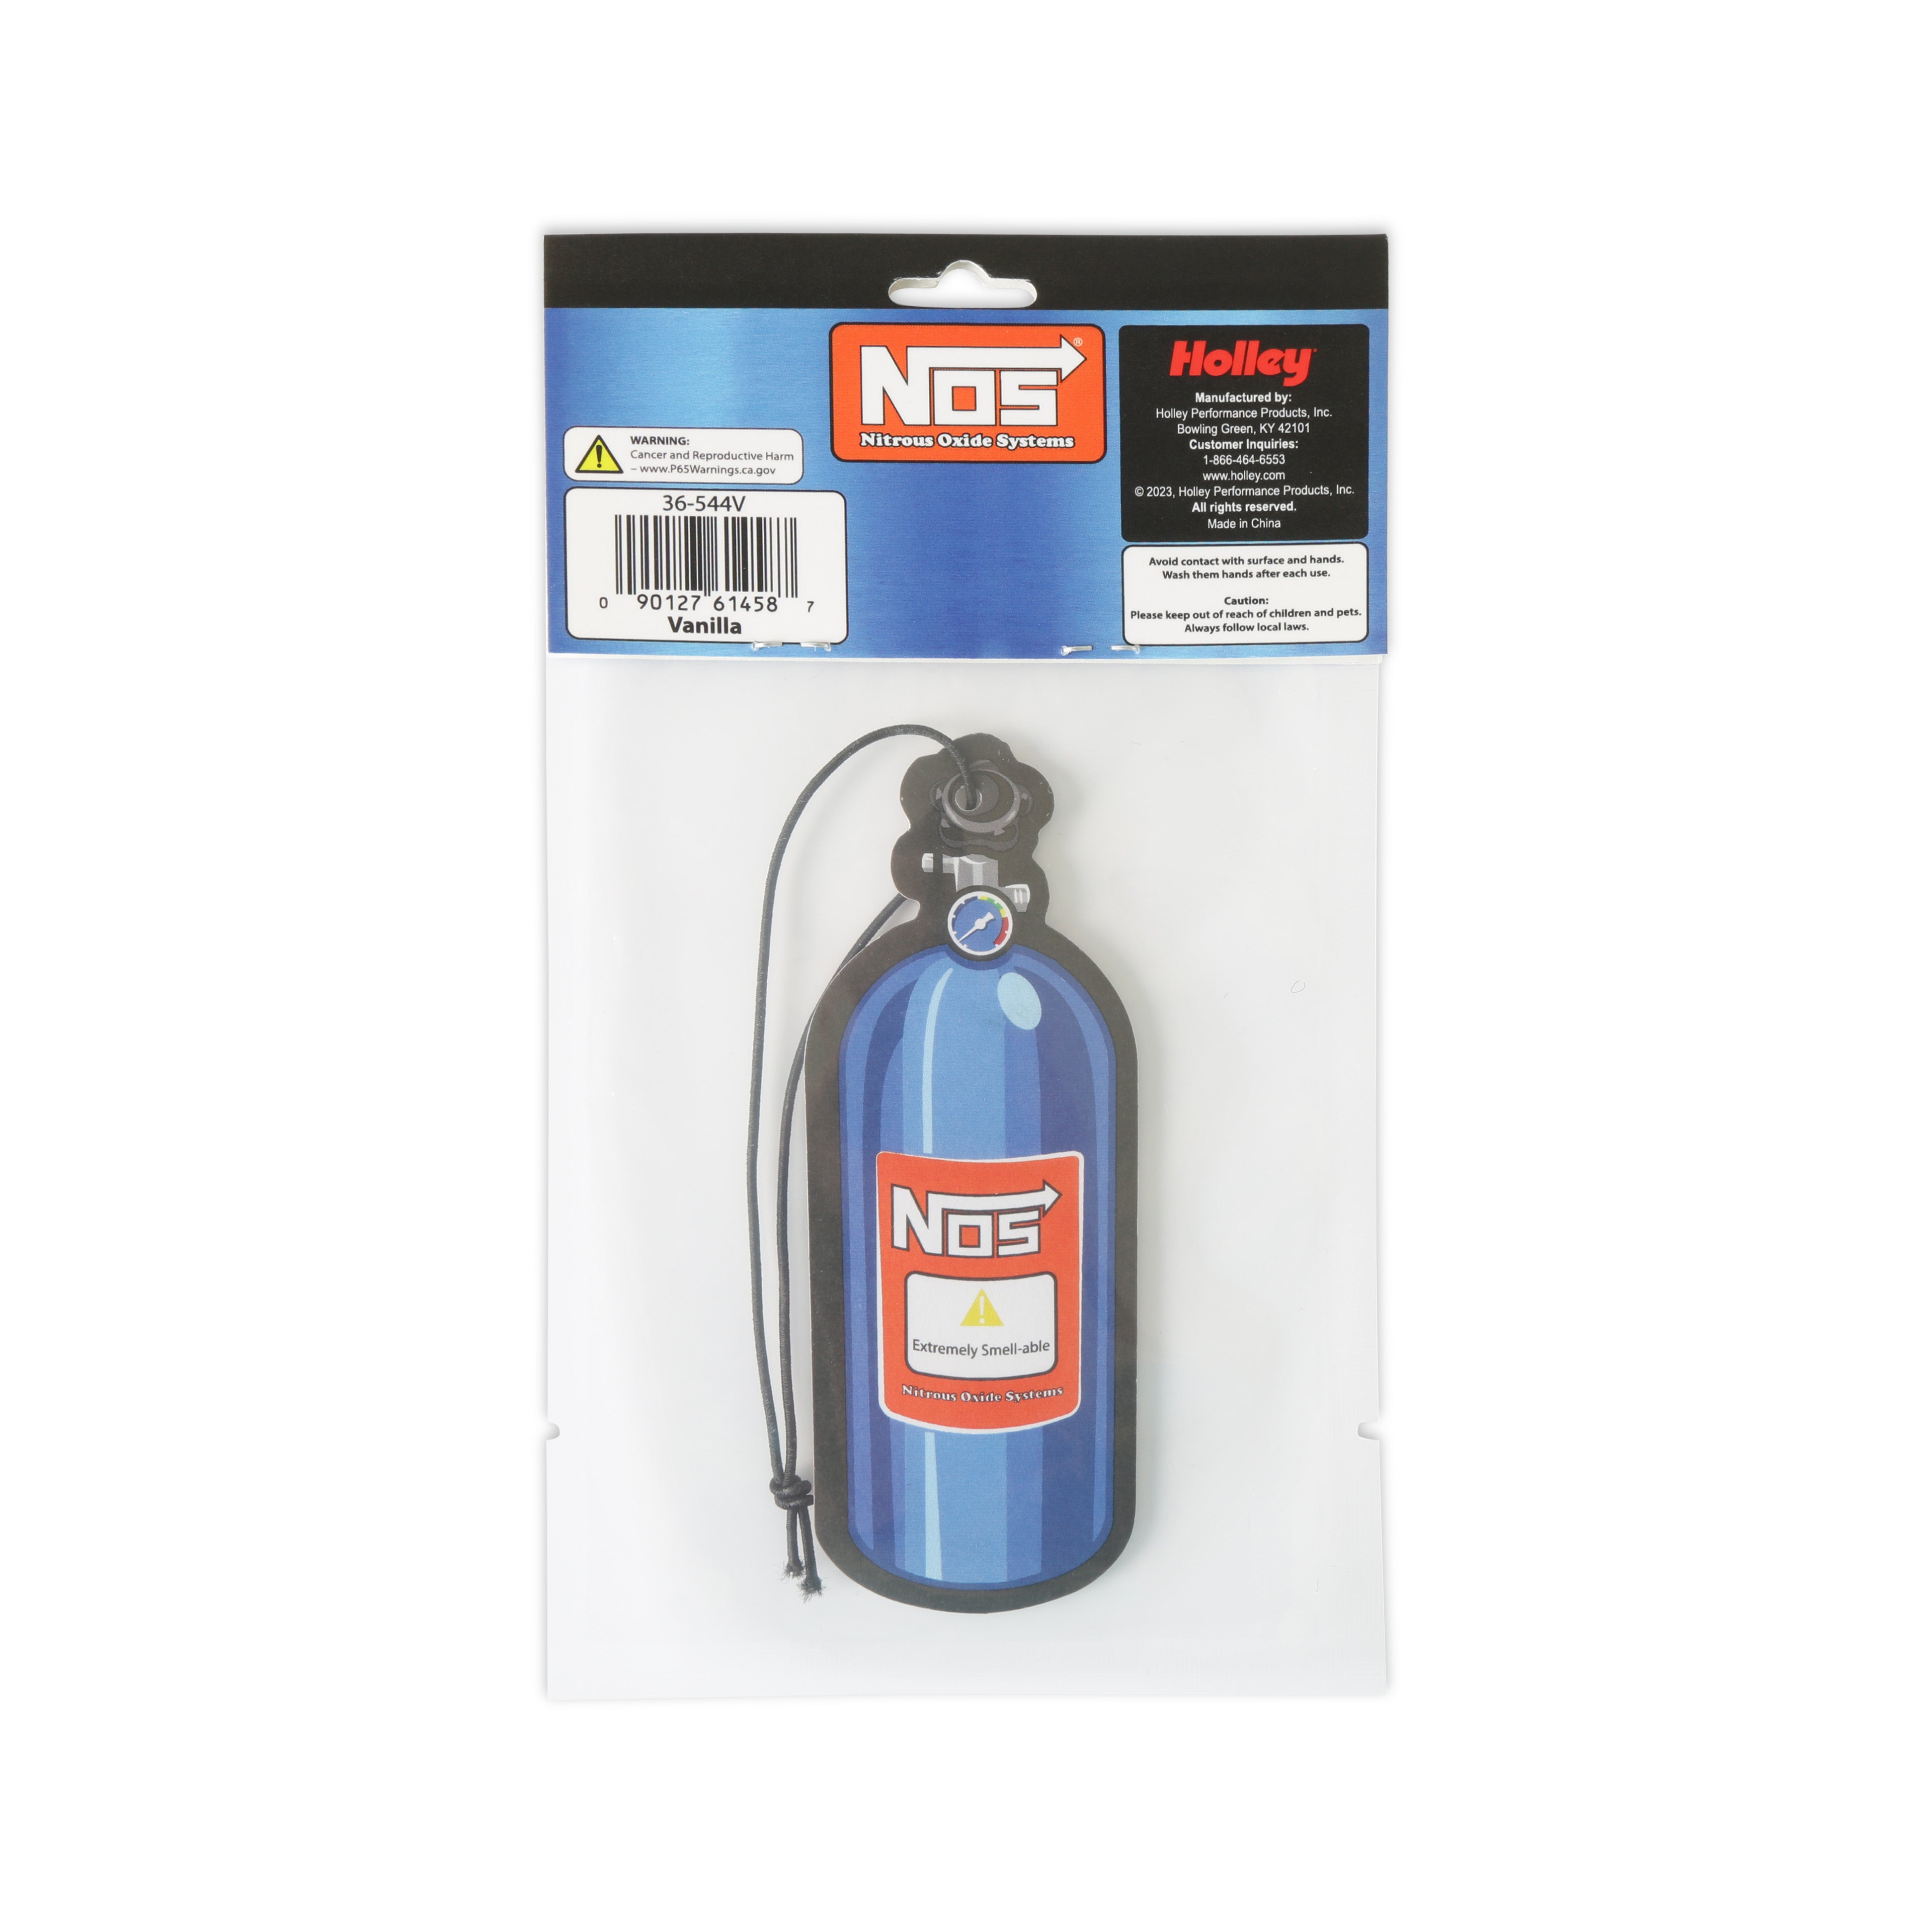 NOS/Nitrous Oxide System Air Freshener 36-544V